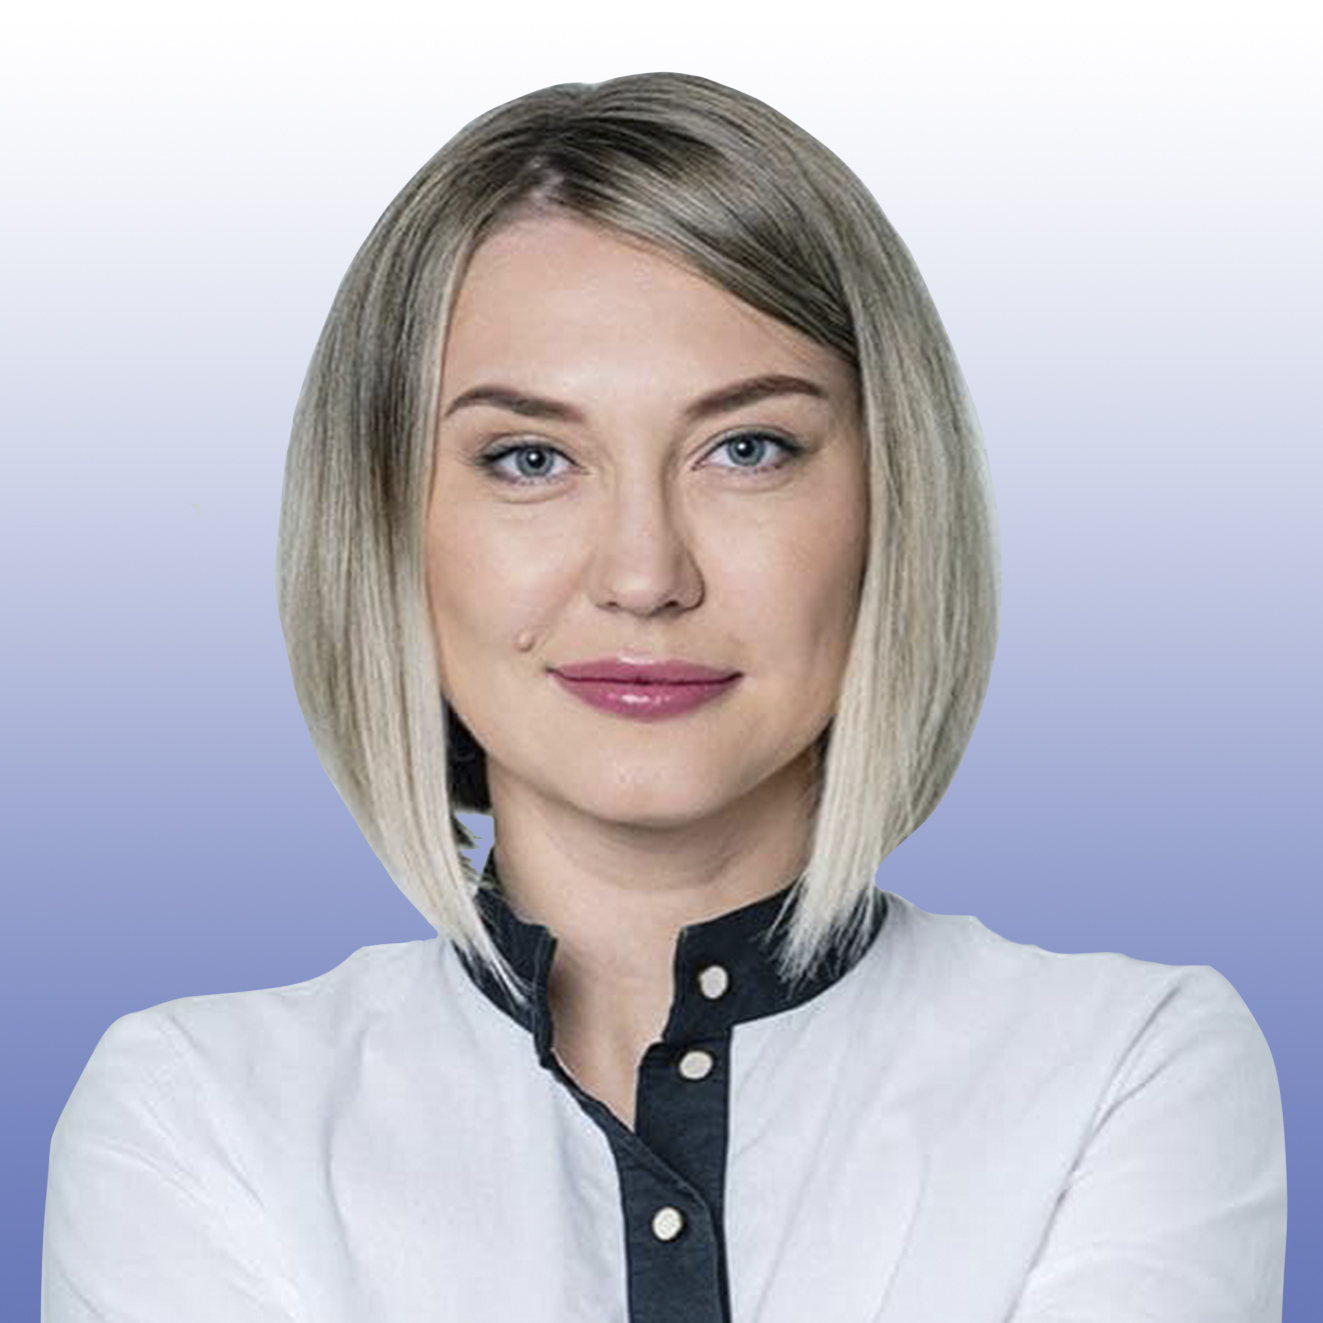 Войнилко Екатерина Андреевна